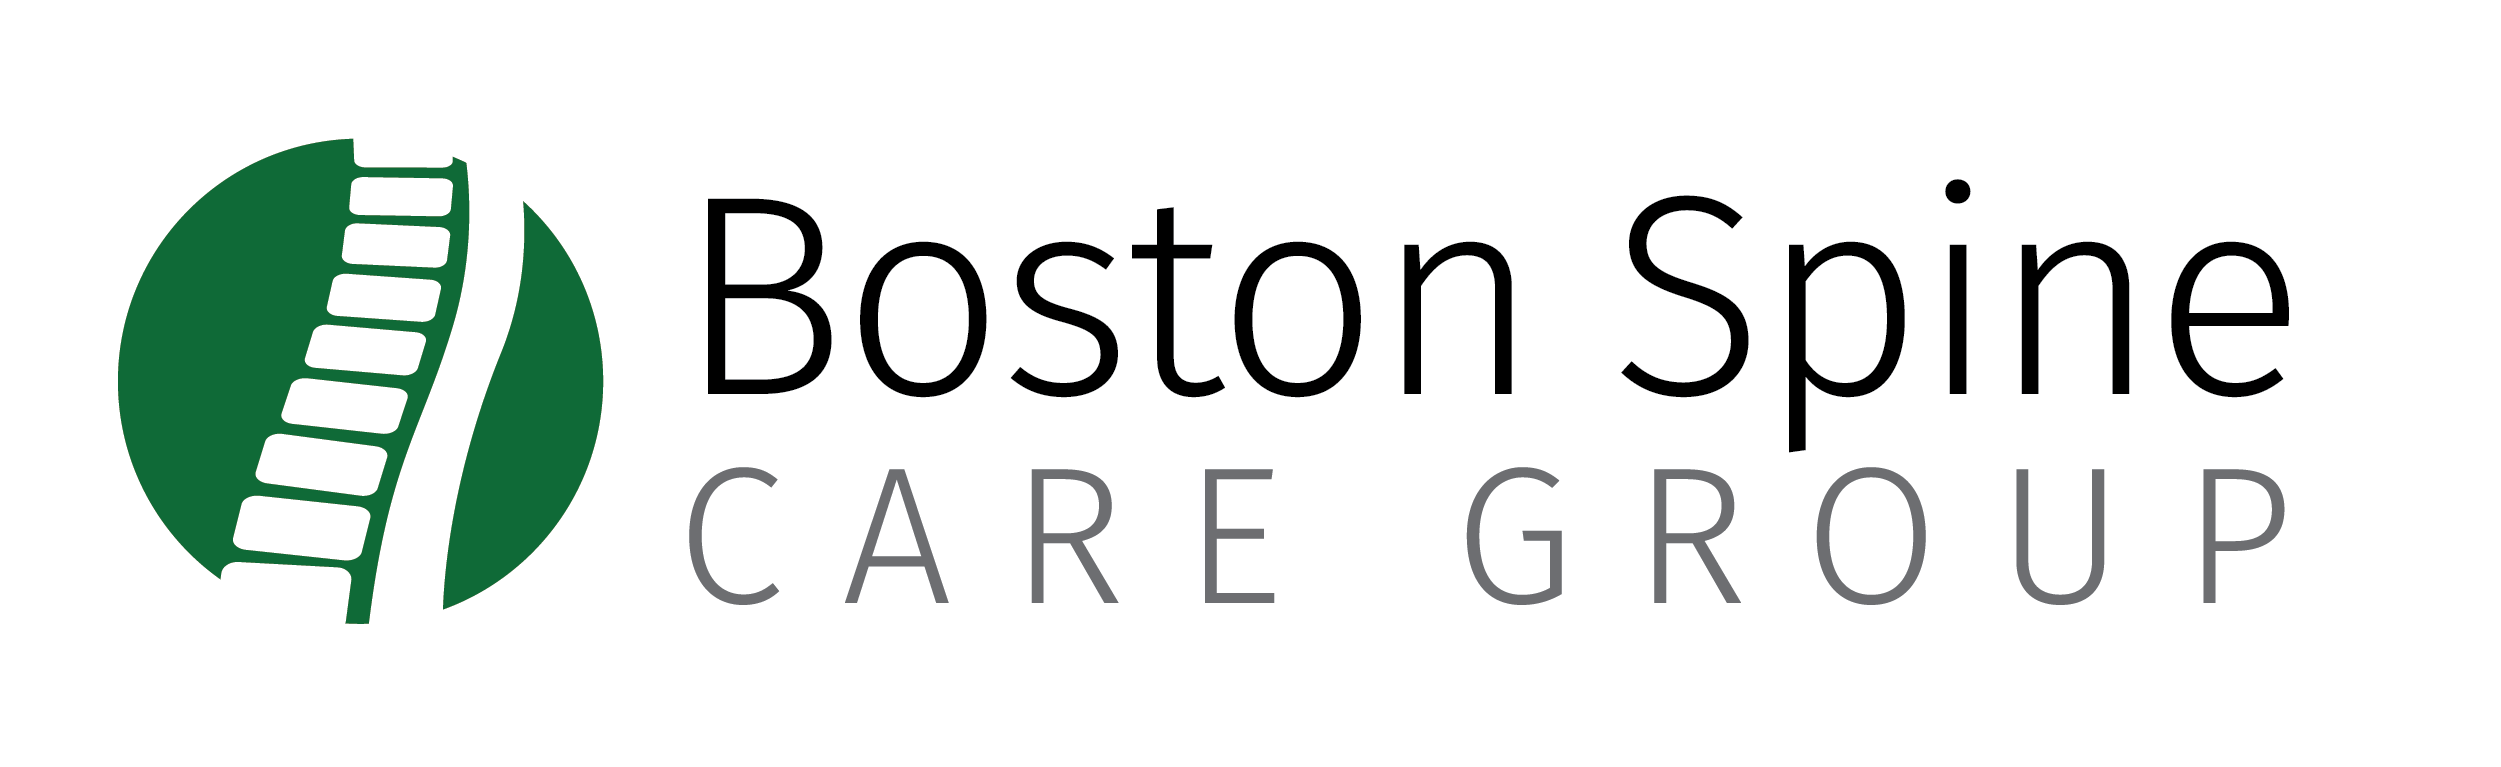 Boston Spine Care Group